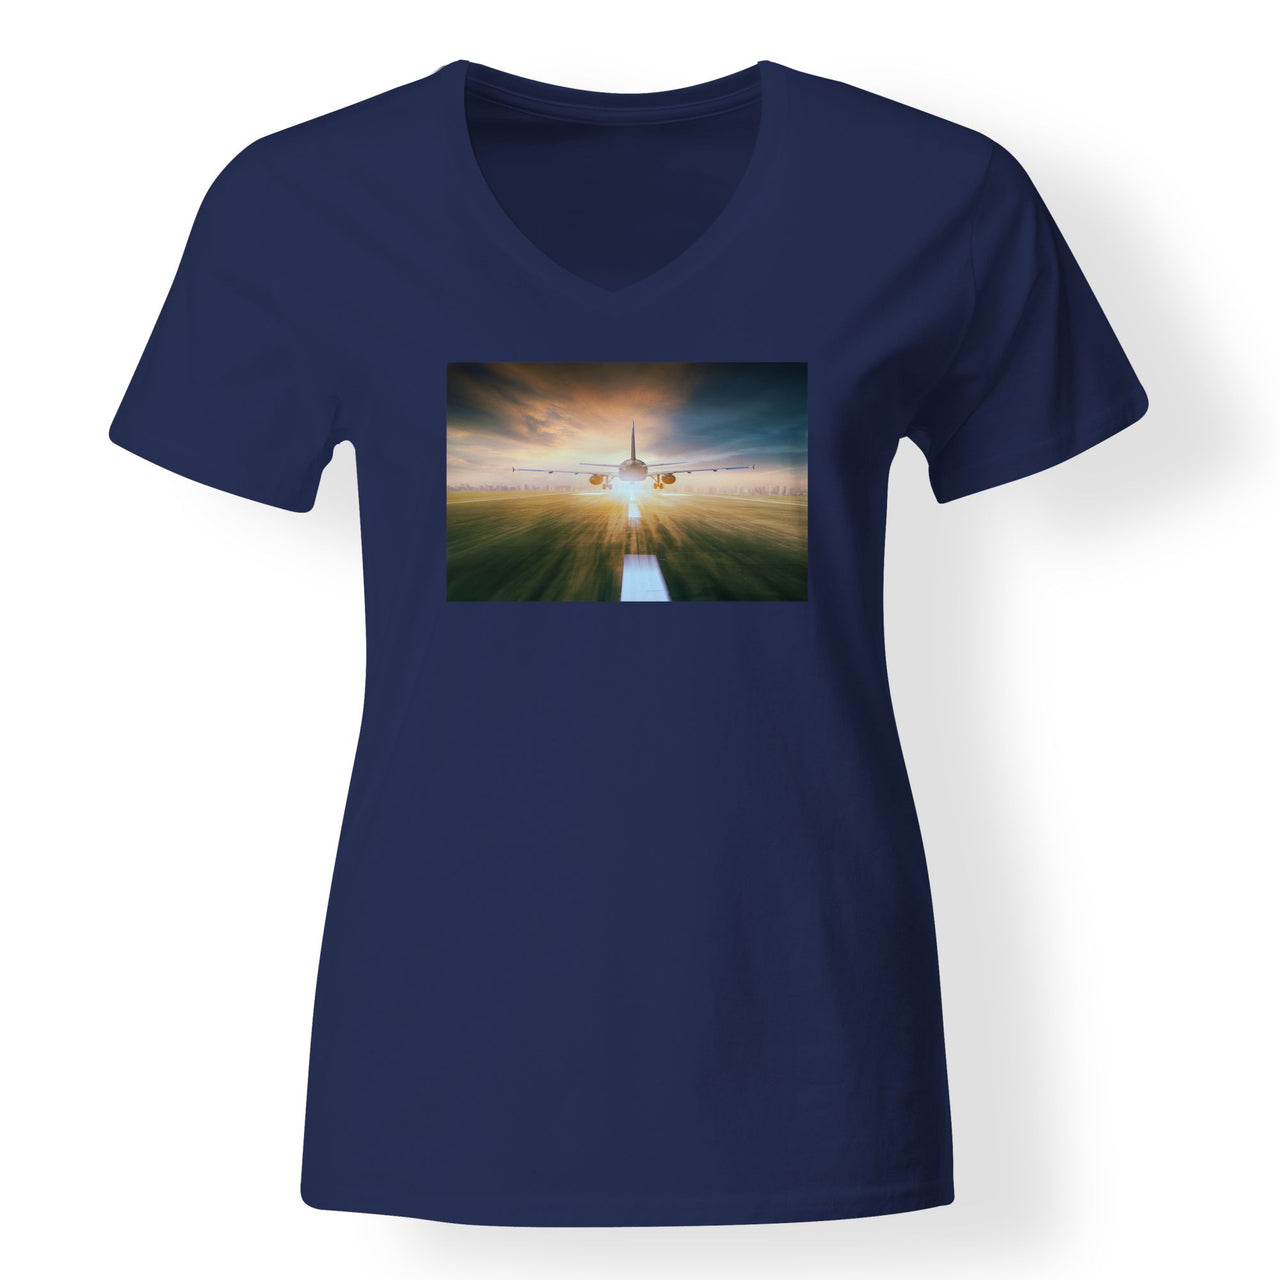 Airplane Flying Over Runway Designed V-Neck T-Shirts